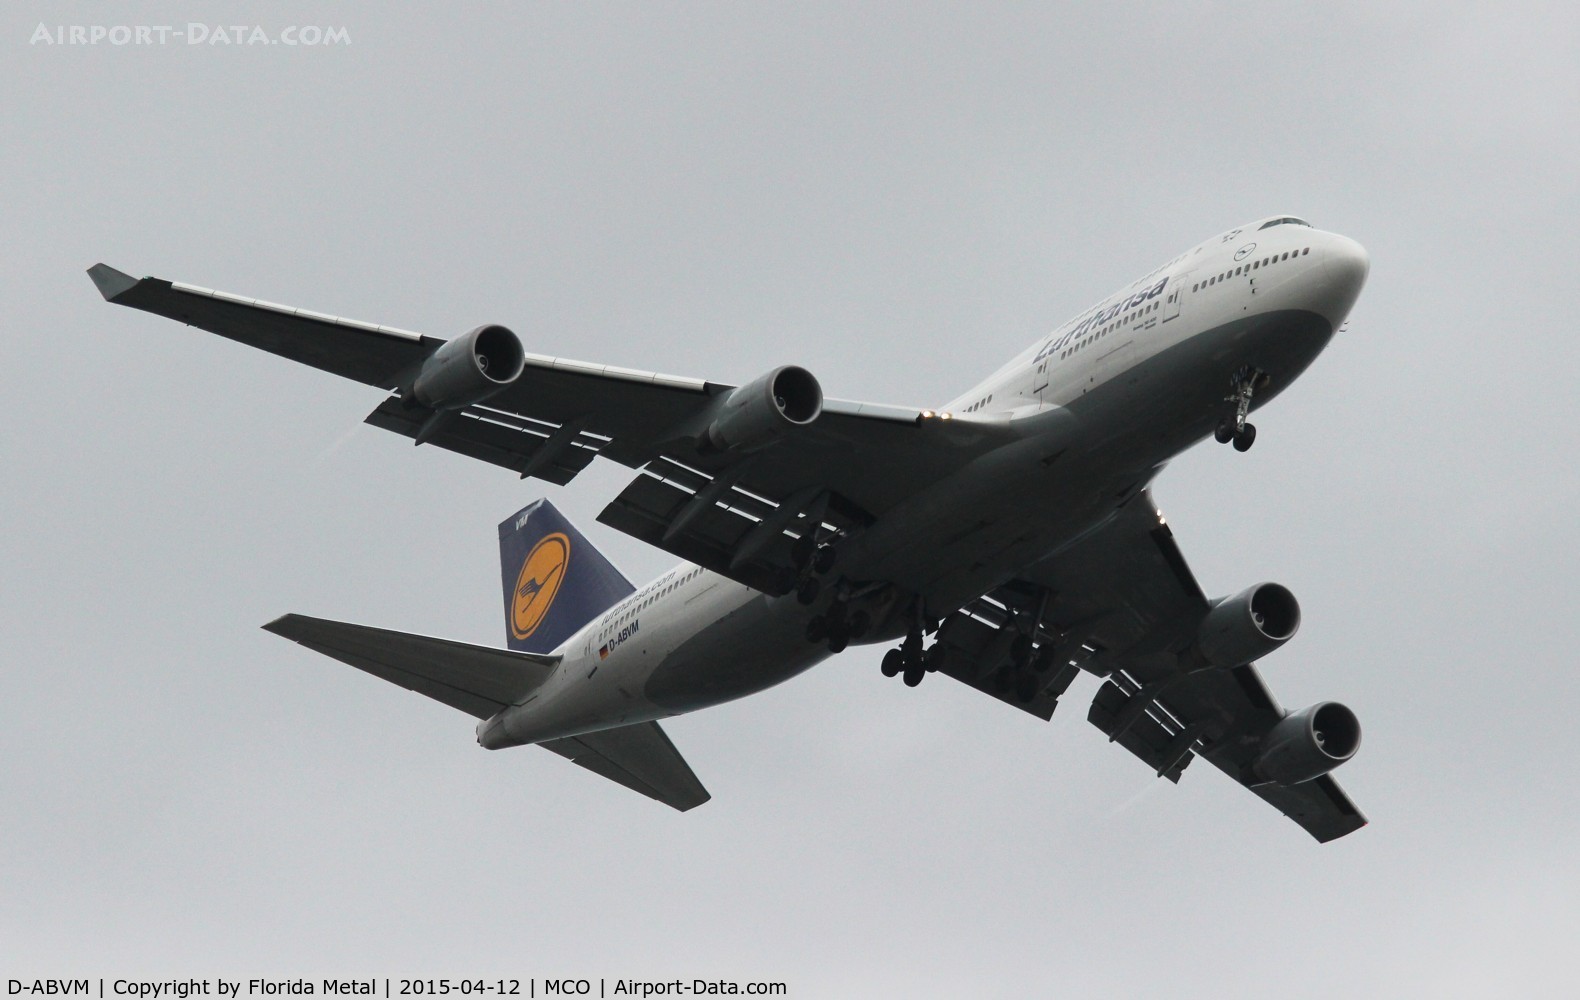 D-ABVM, 1998 Boeing 747-430 C/N 29101, Lufthansa